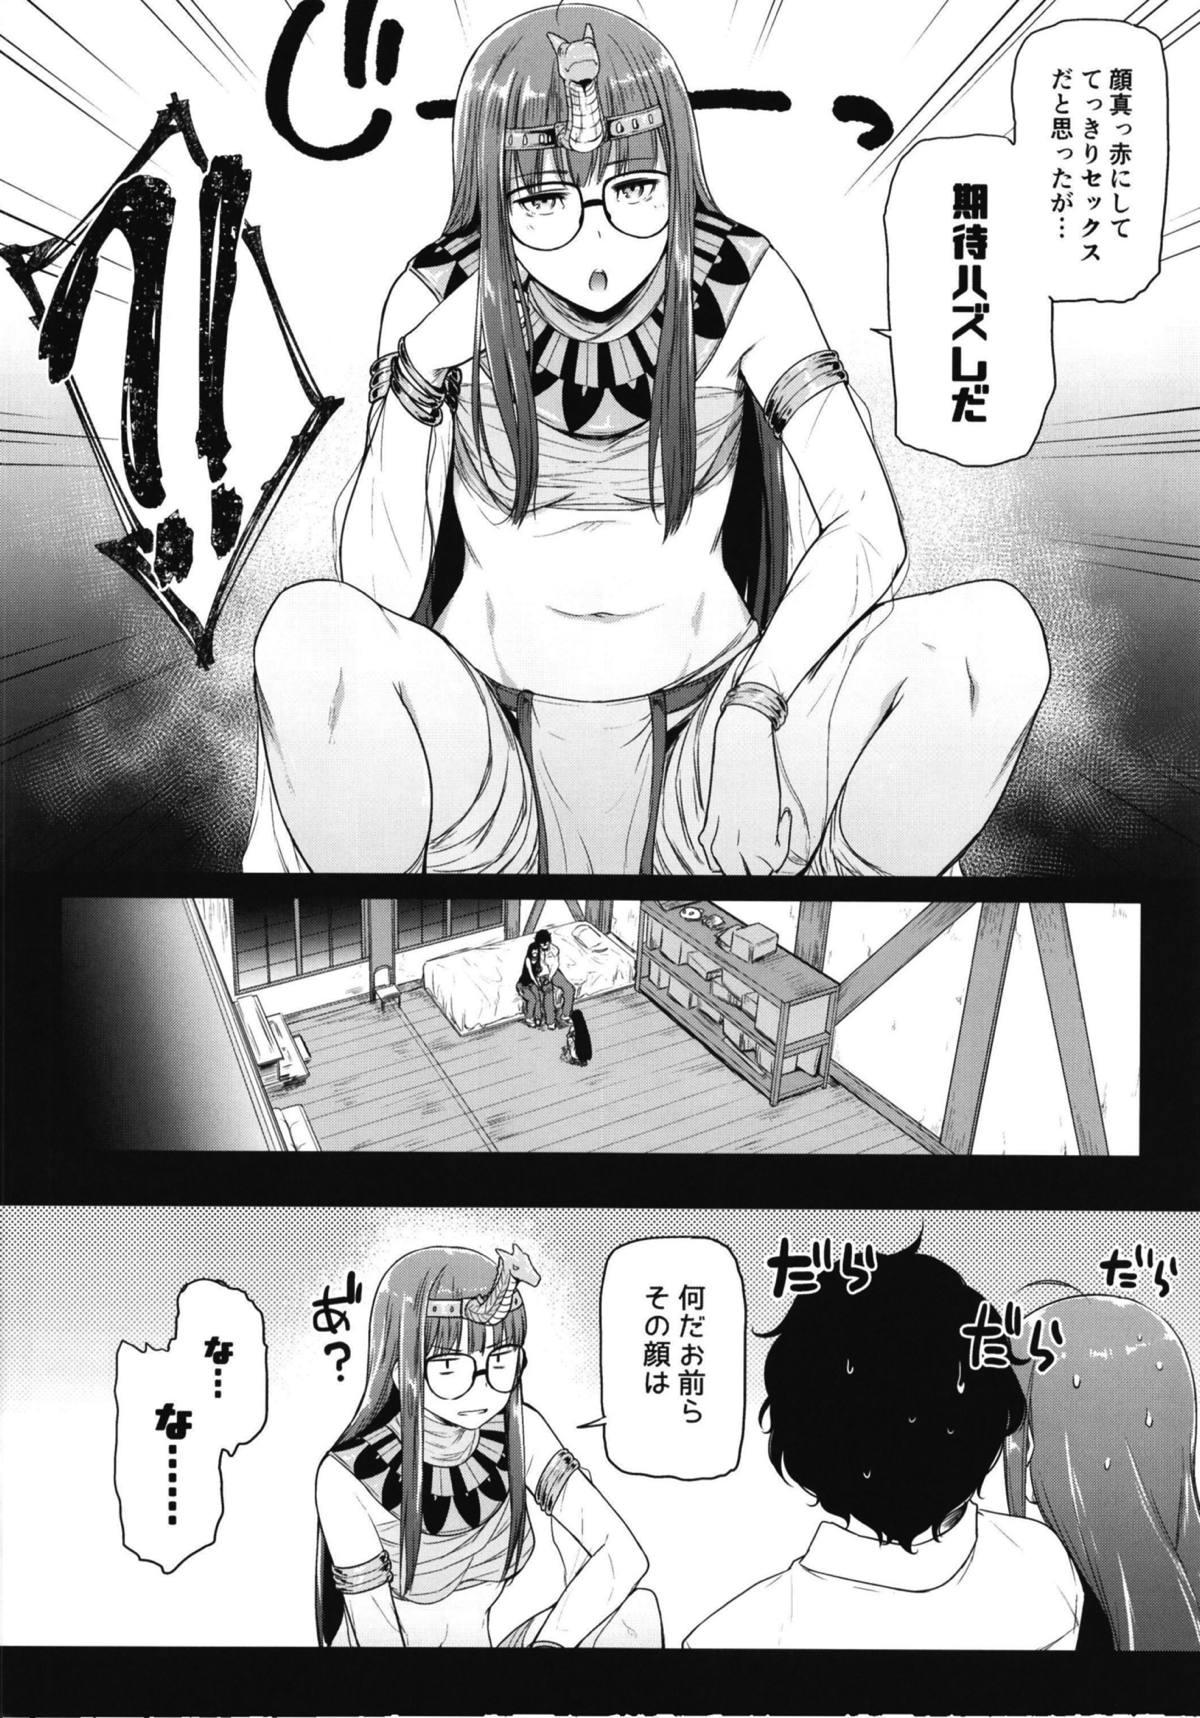 Puba Futari no Futaba - Persona 5 19yo - Page 5